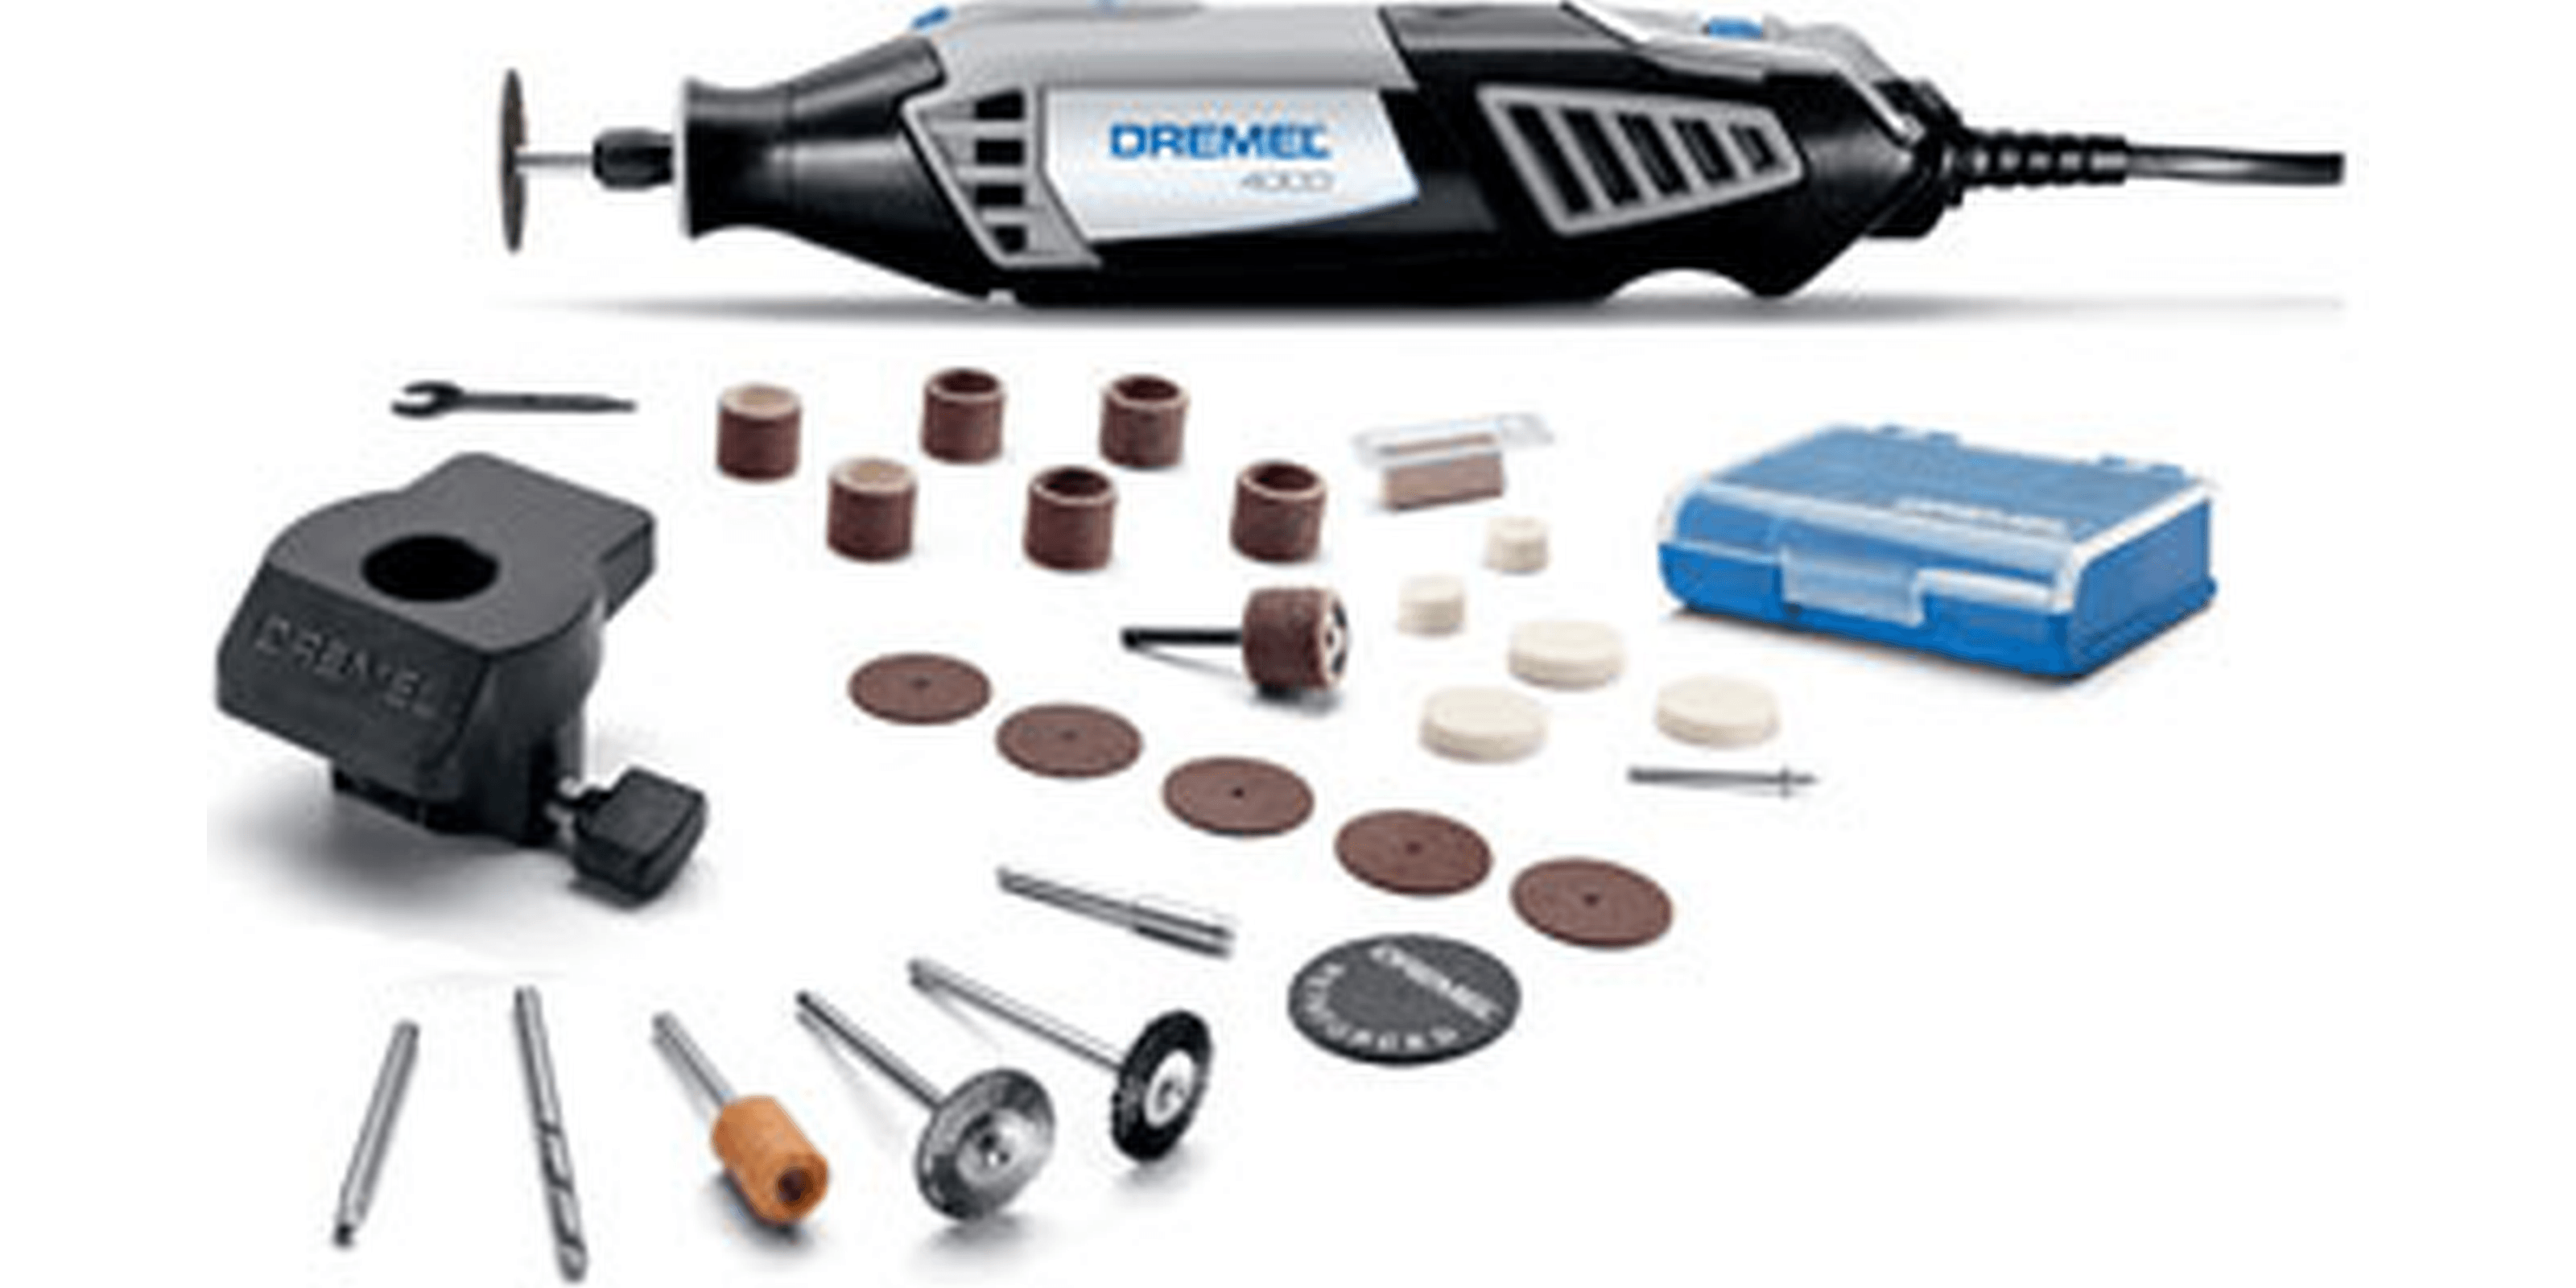 DREMEL® 4000 Corded Tools